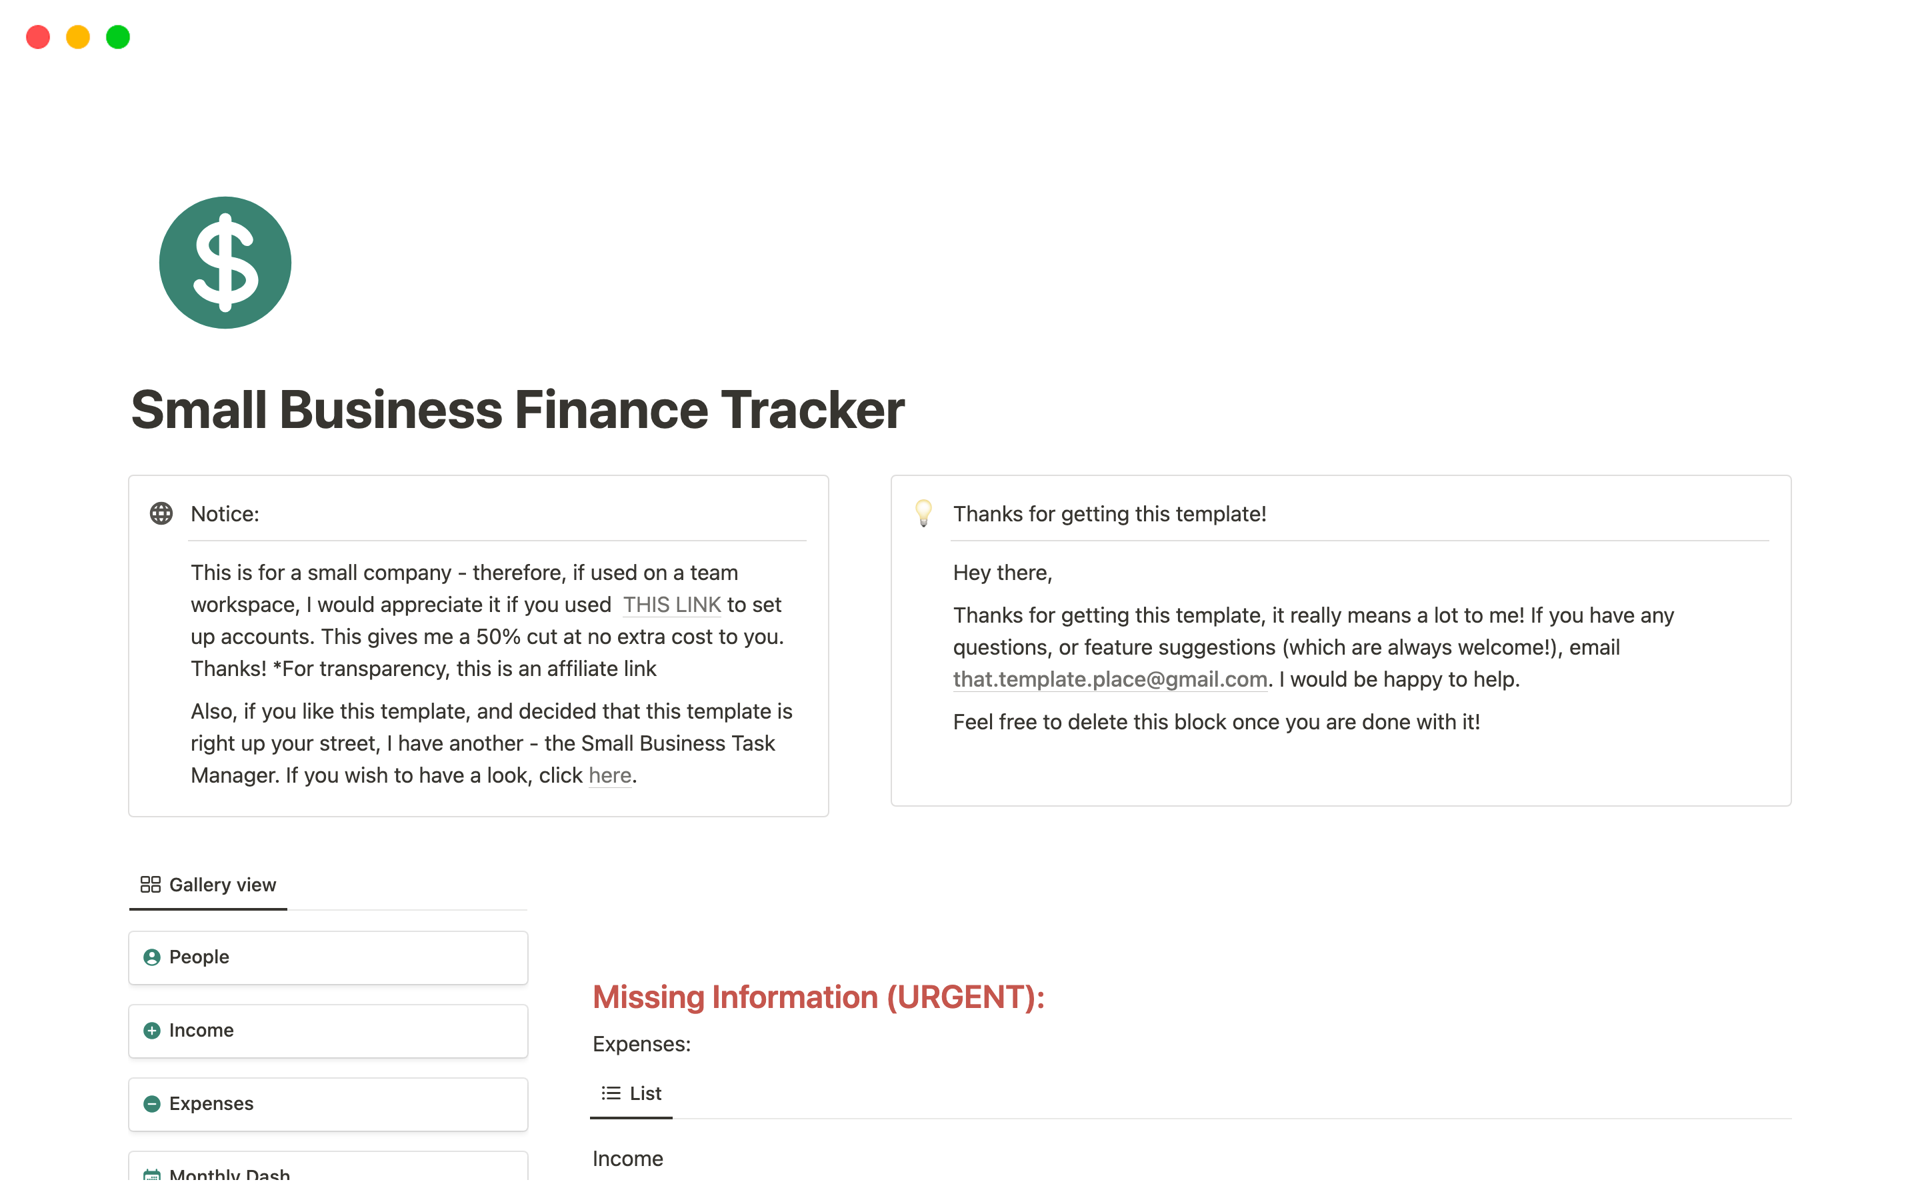 Vista previa de una plantilla para Small Business Finance Manager